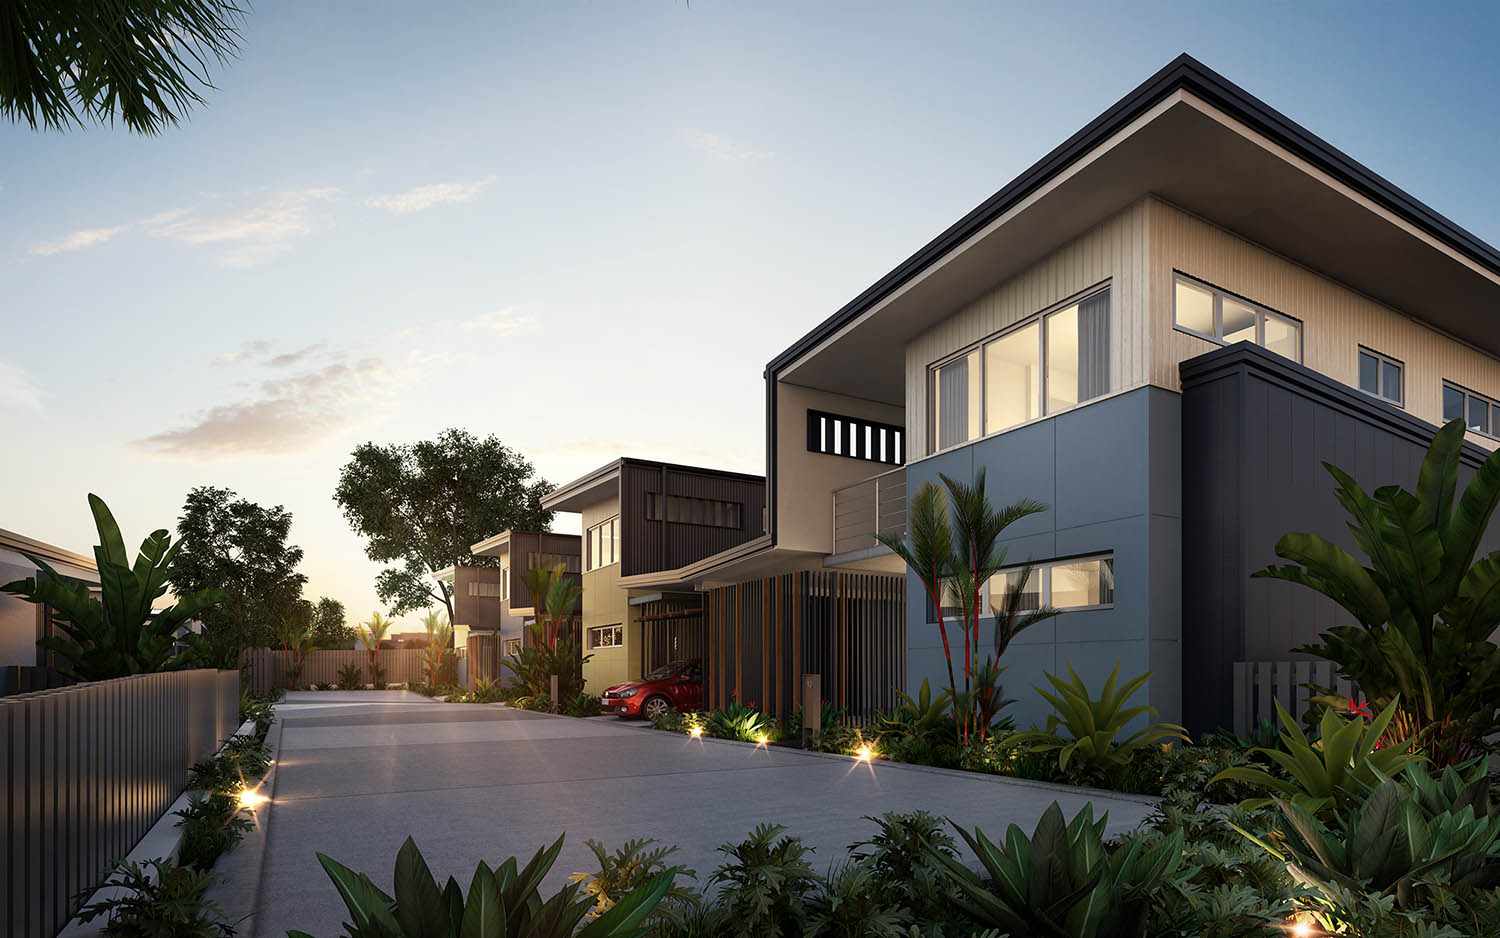 Slade Point Units — Architecture & Interior Design in Mackay, QLD